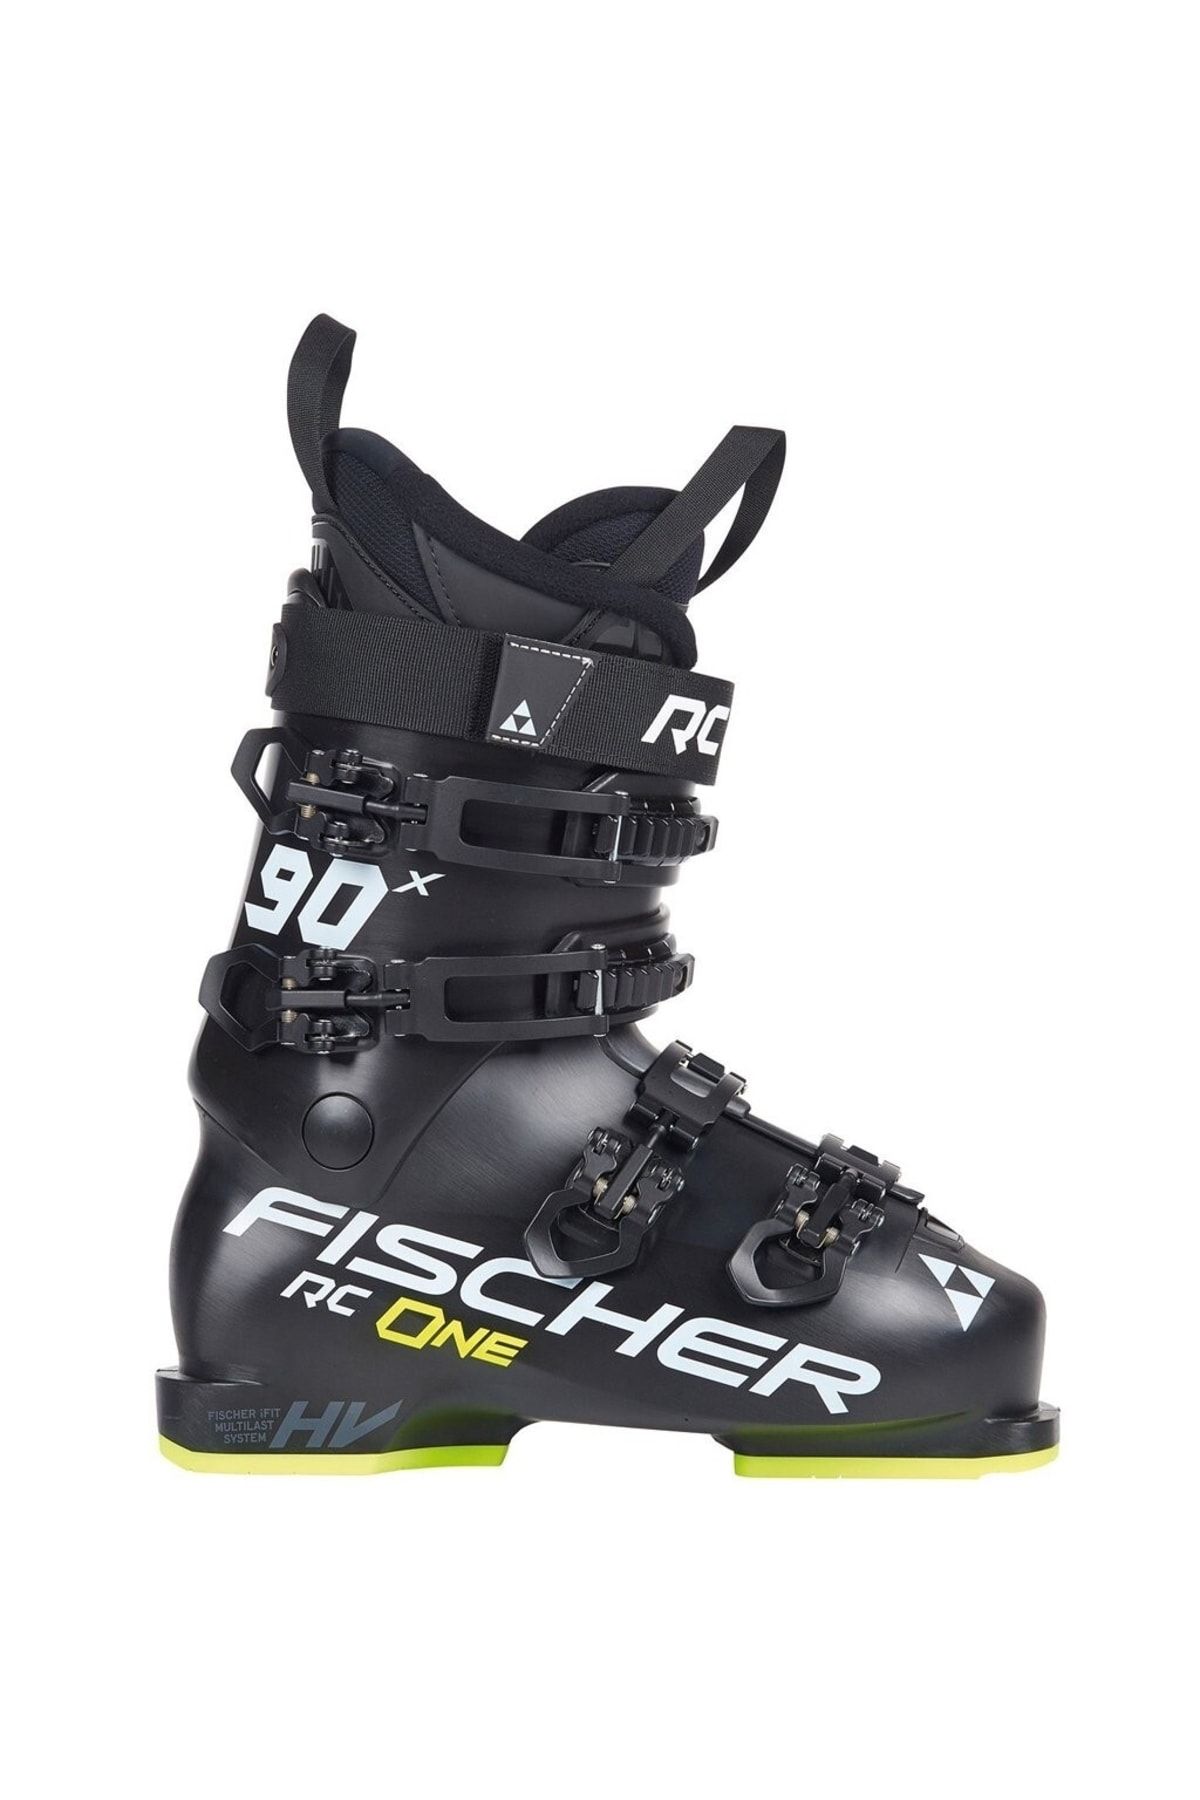 Fischer Rc One X 90 Kayak Ayakkabısı